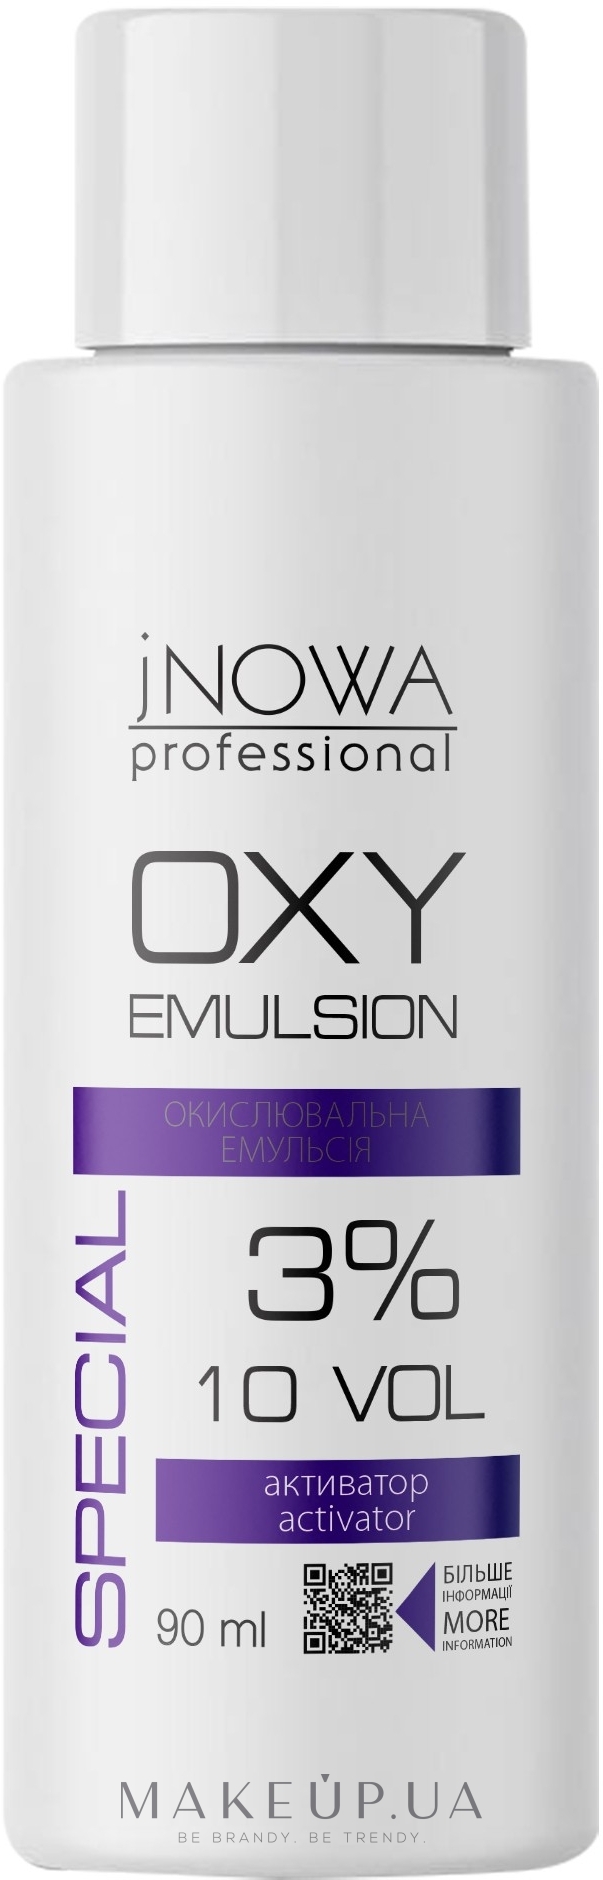 Окислительная эмульсия, 3 % - jNOWA Professional OXY 3 % (10 vol) — фото 90ml